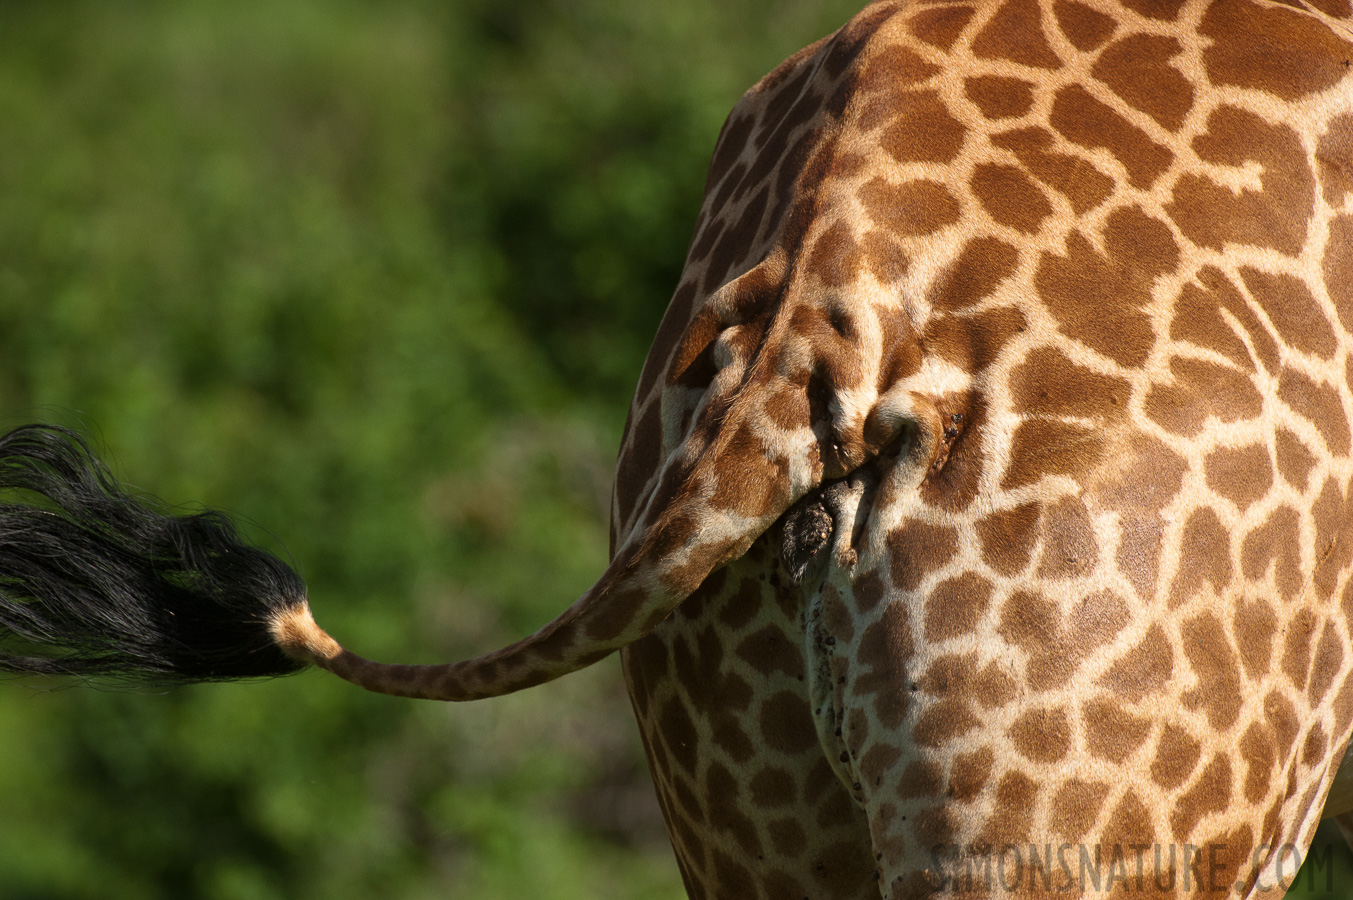 Giraffa tippelskirchi [550 mm, 1/3200 Sek. bei f / 8.0, ISO 1600]